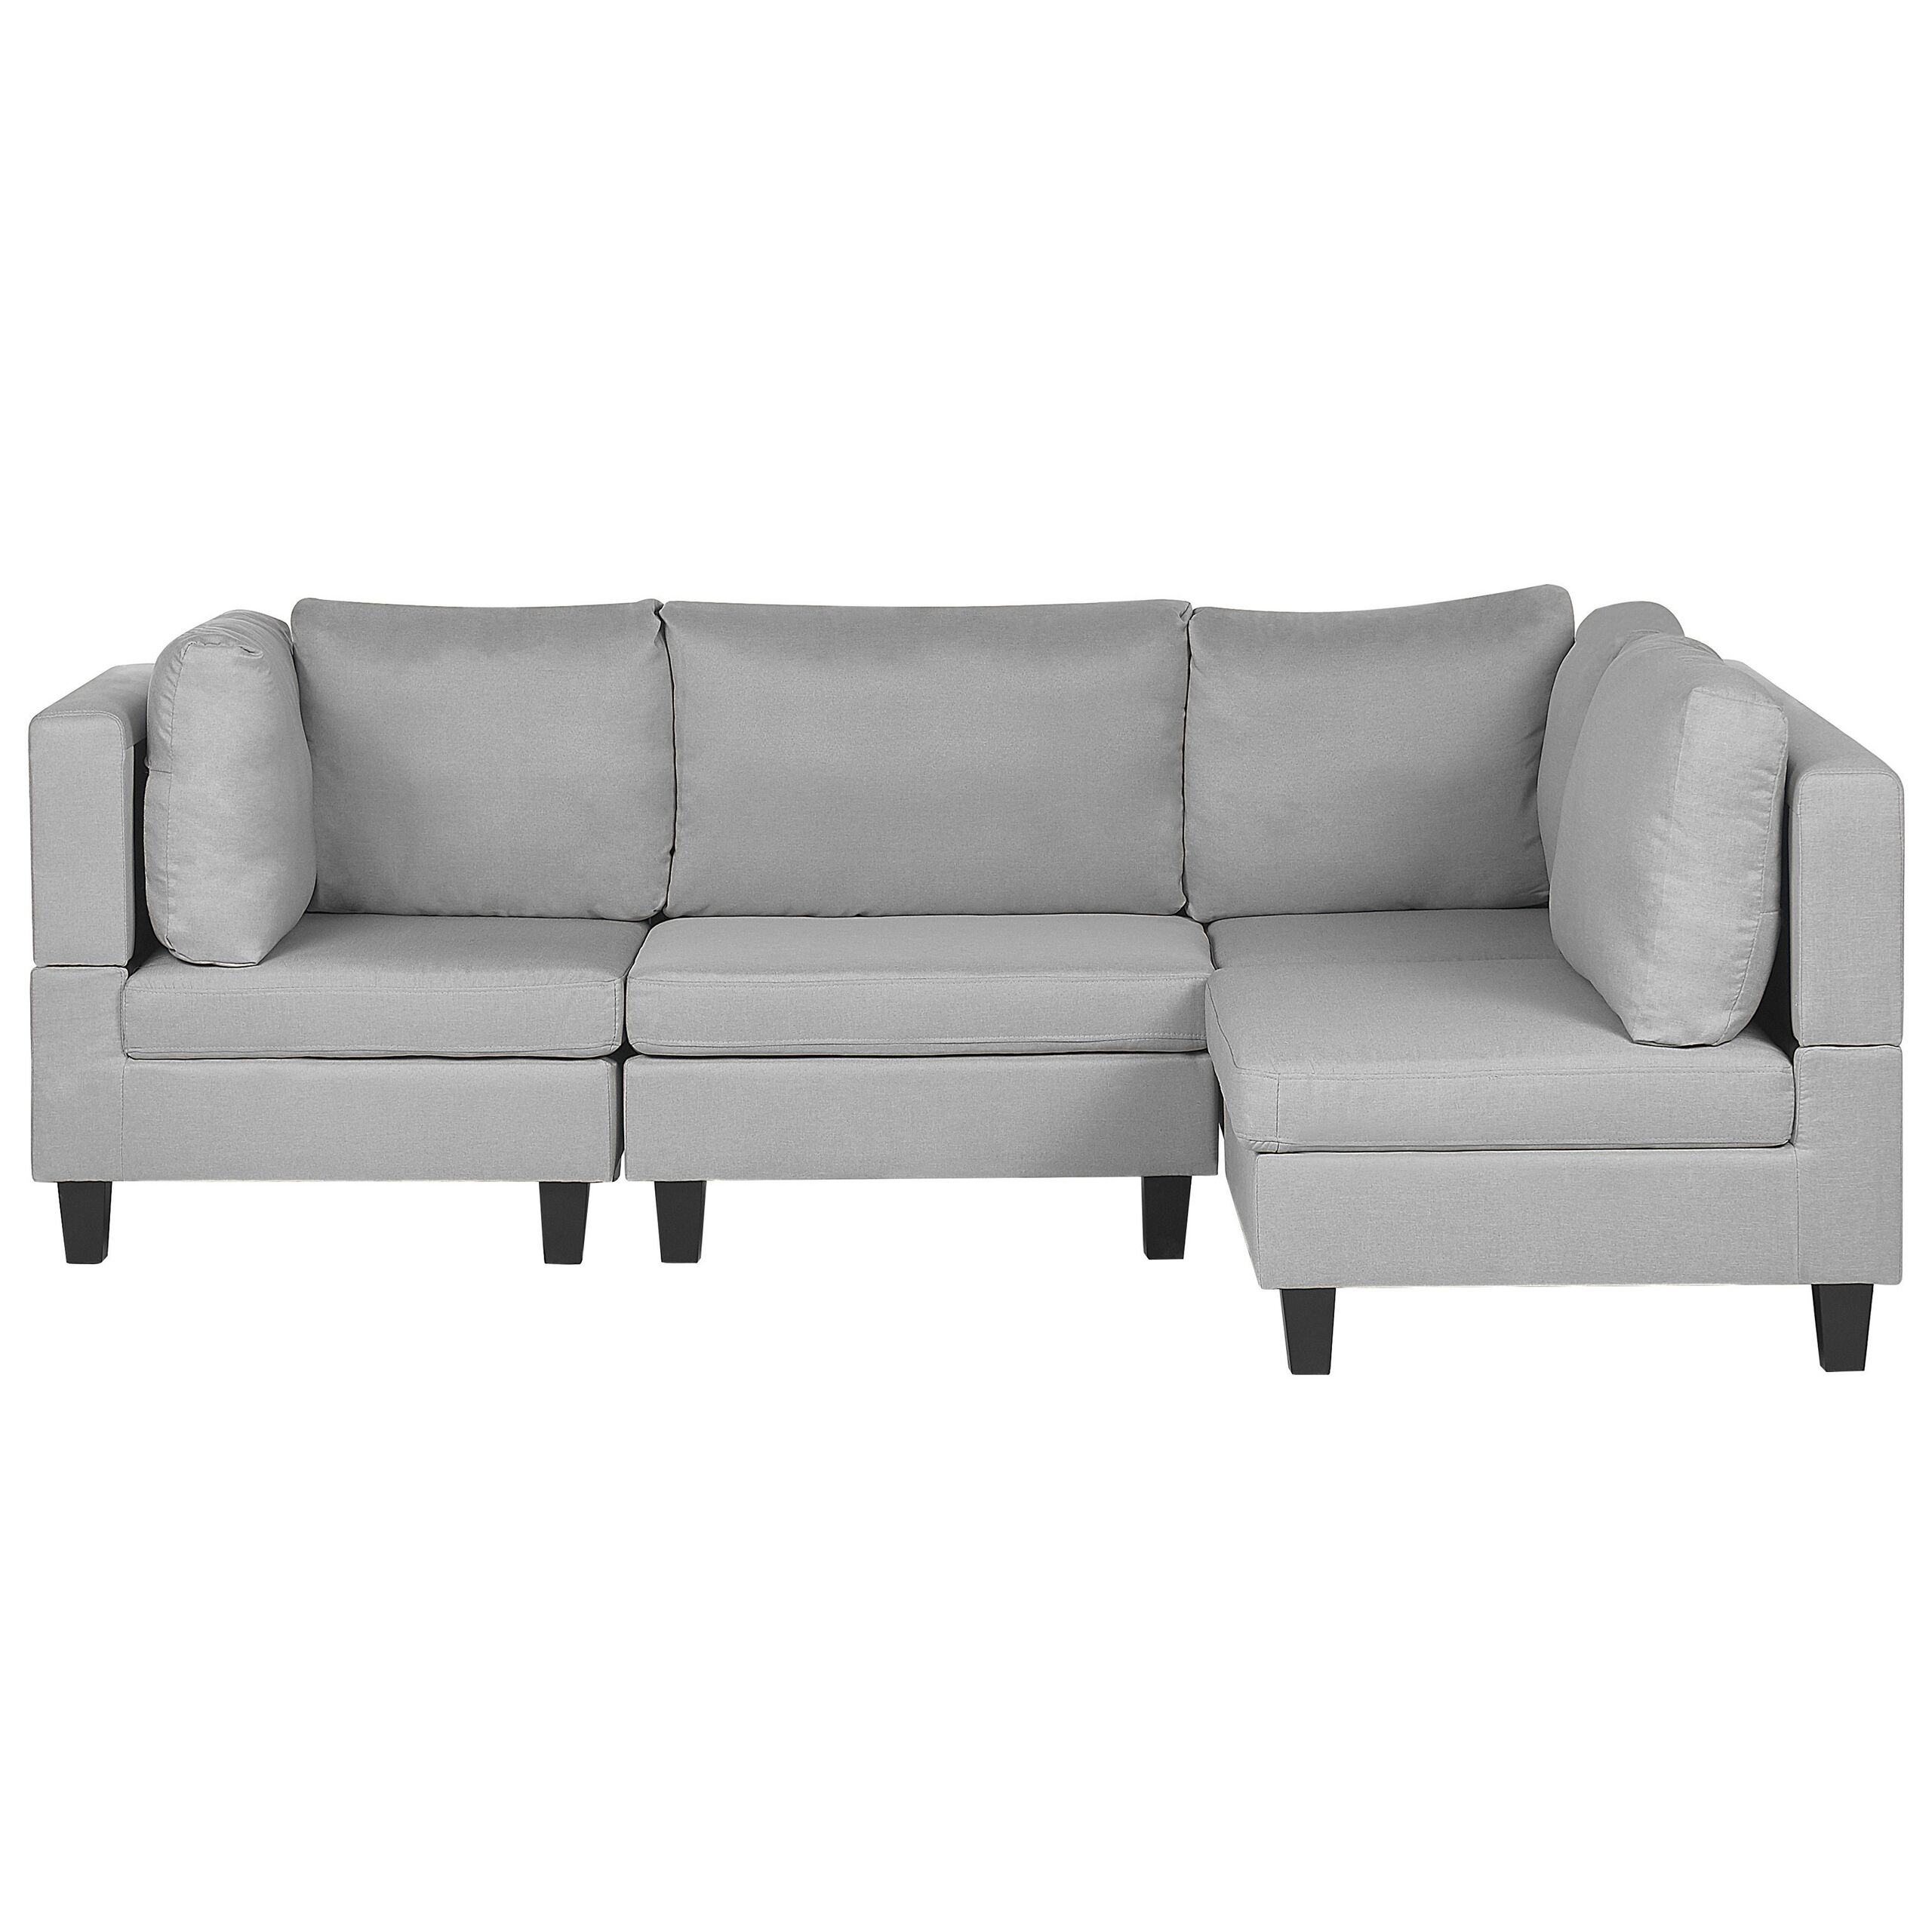 Beliani Sofá de canto estofado em tecido cinzento claro 4 lugares capas de almofadas removíveis estilo minimalista